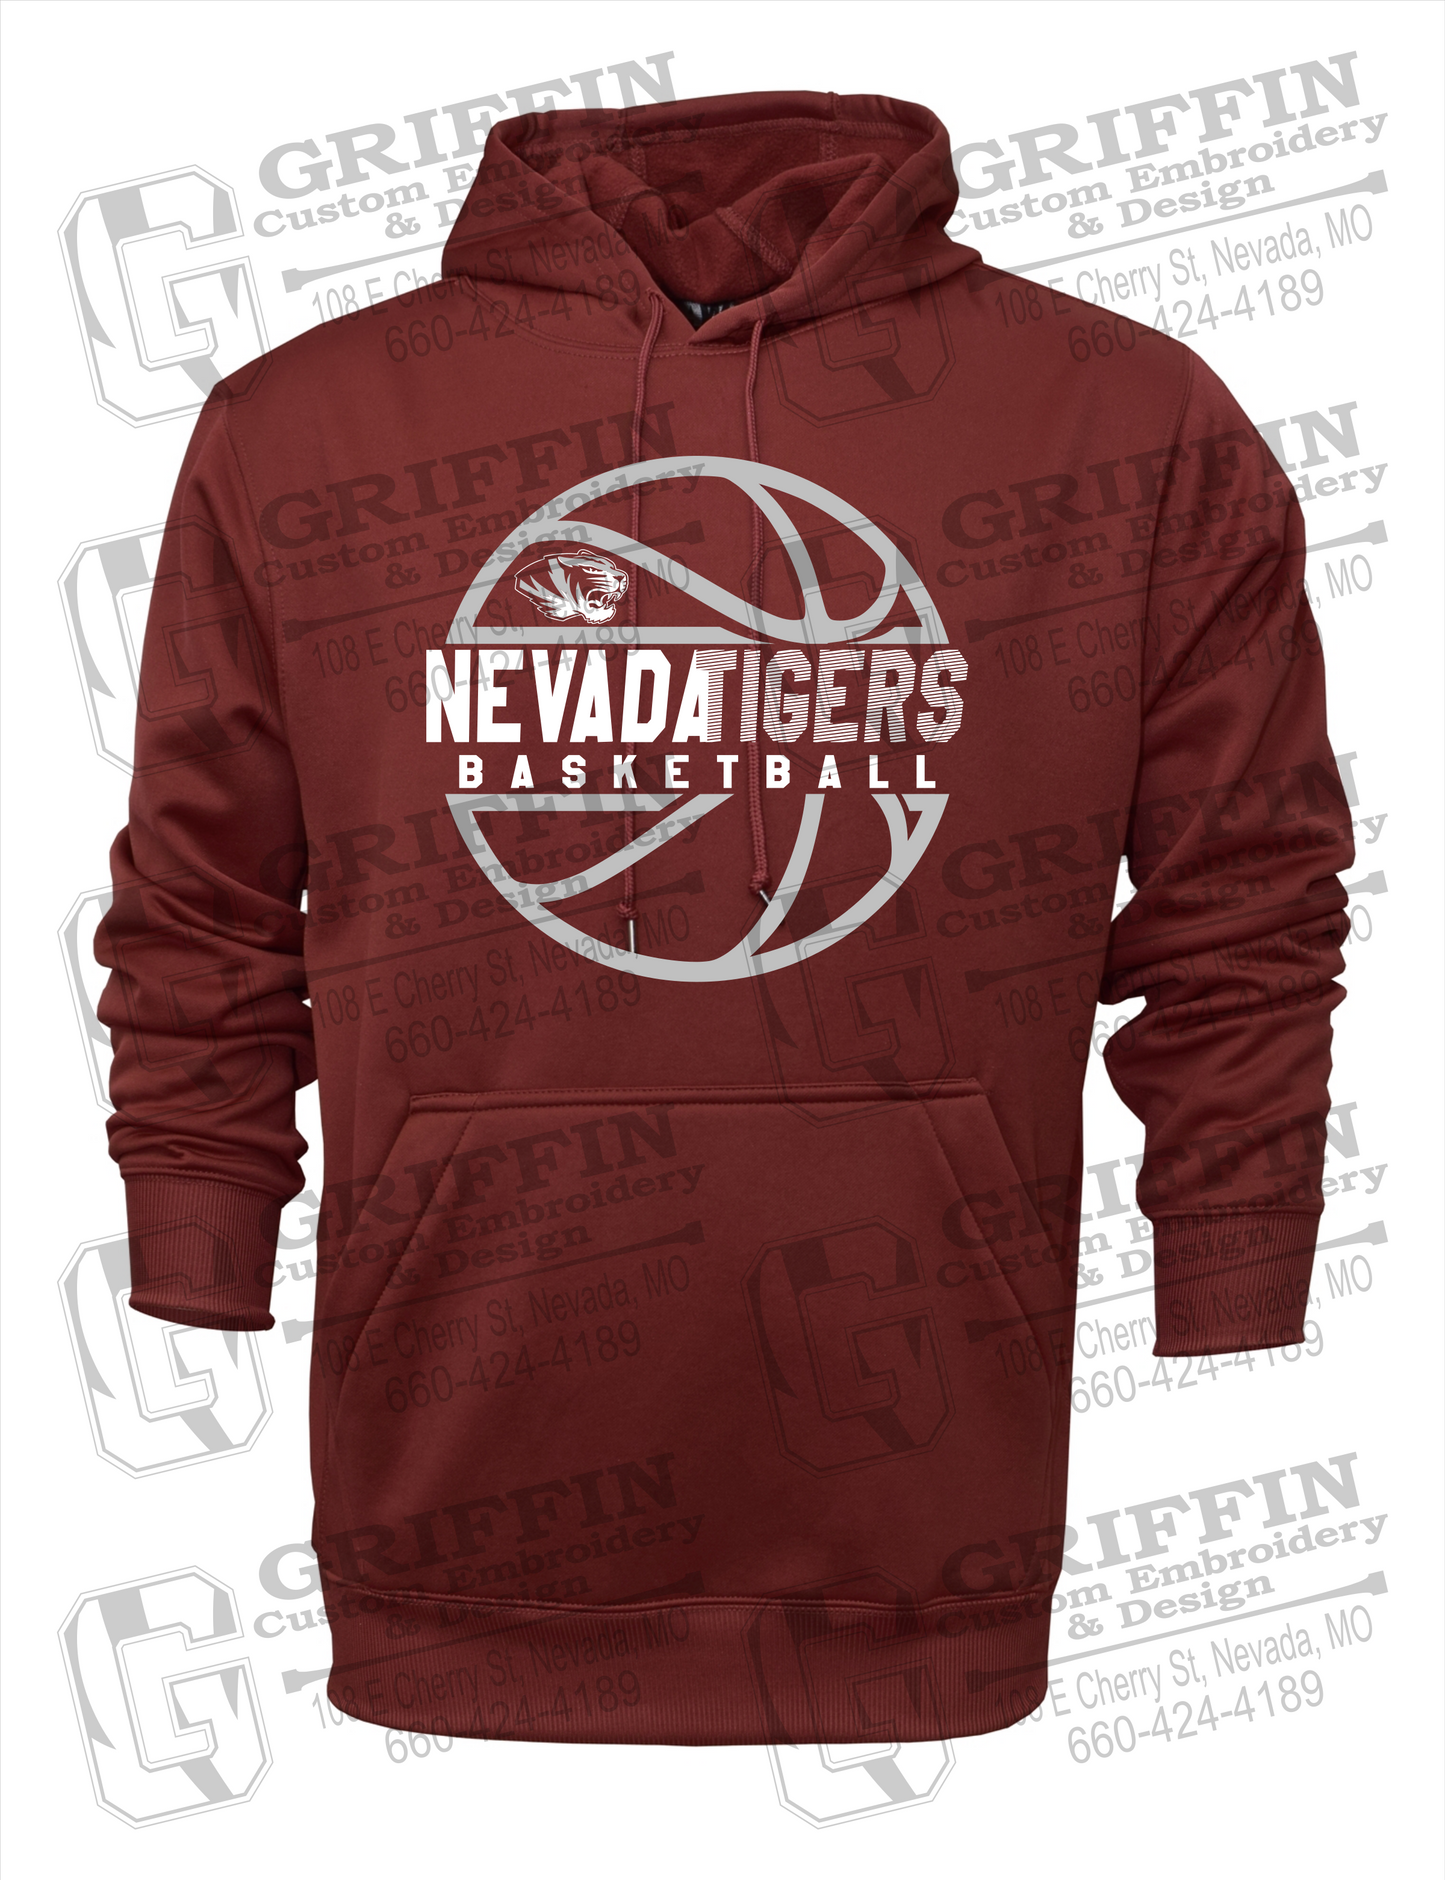 Nevada Tigers 19-V Hoodie - Basketball